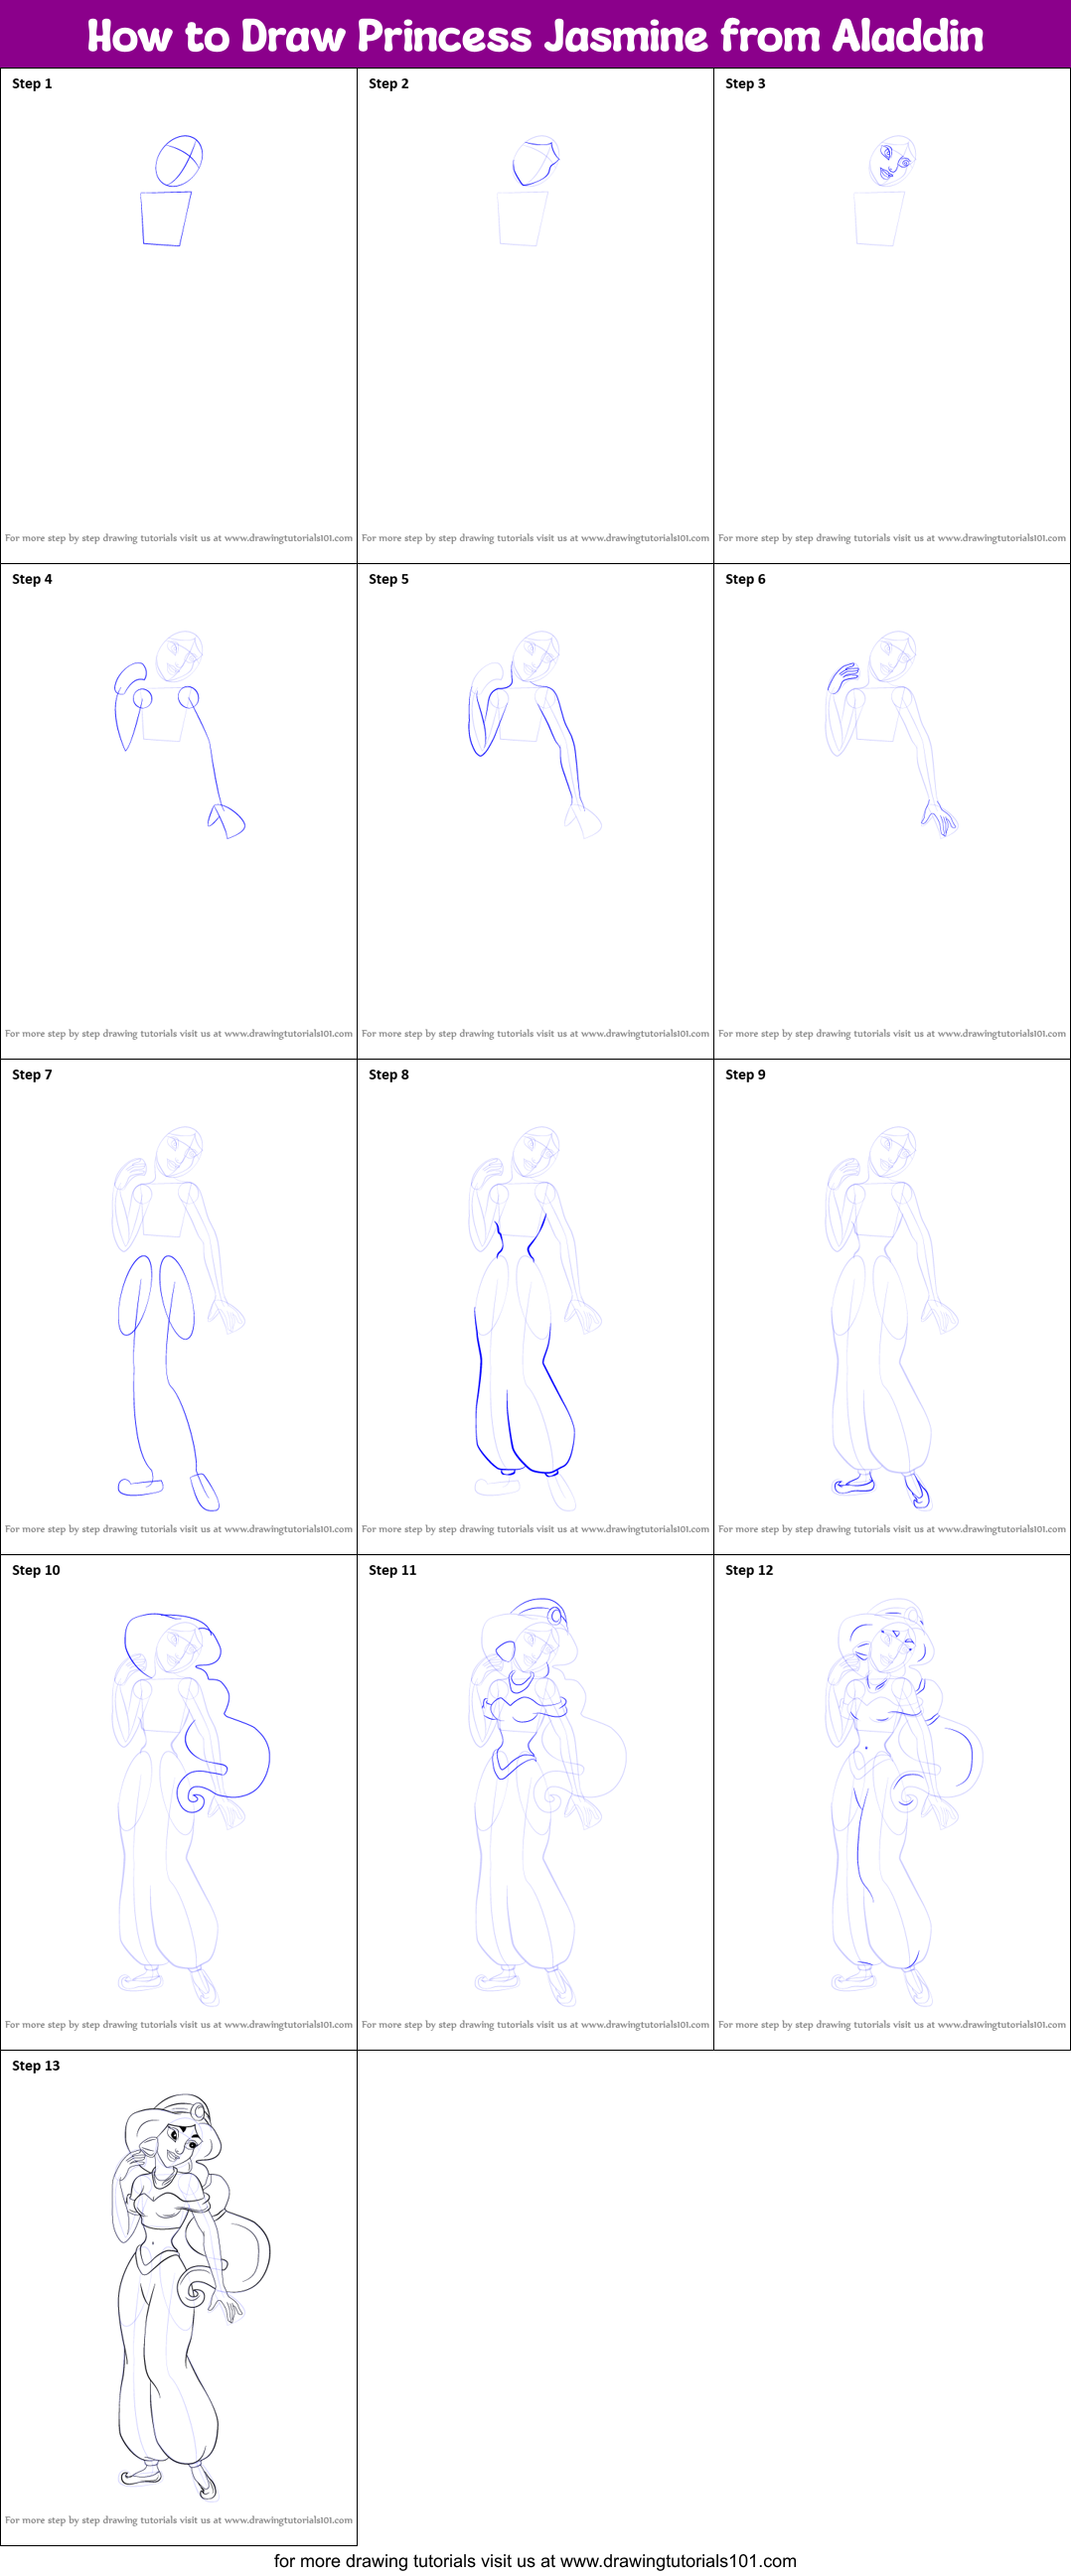 How To Draw Princess Jasmine From Aladdin Printable Step By Step